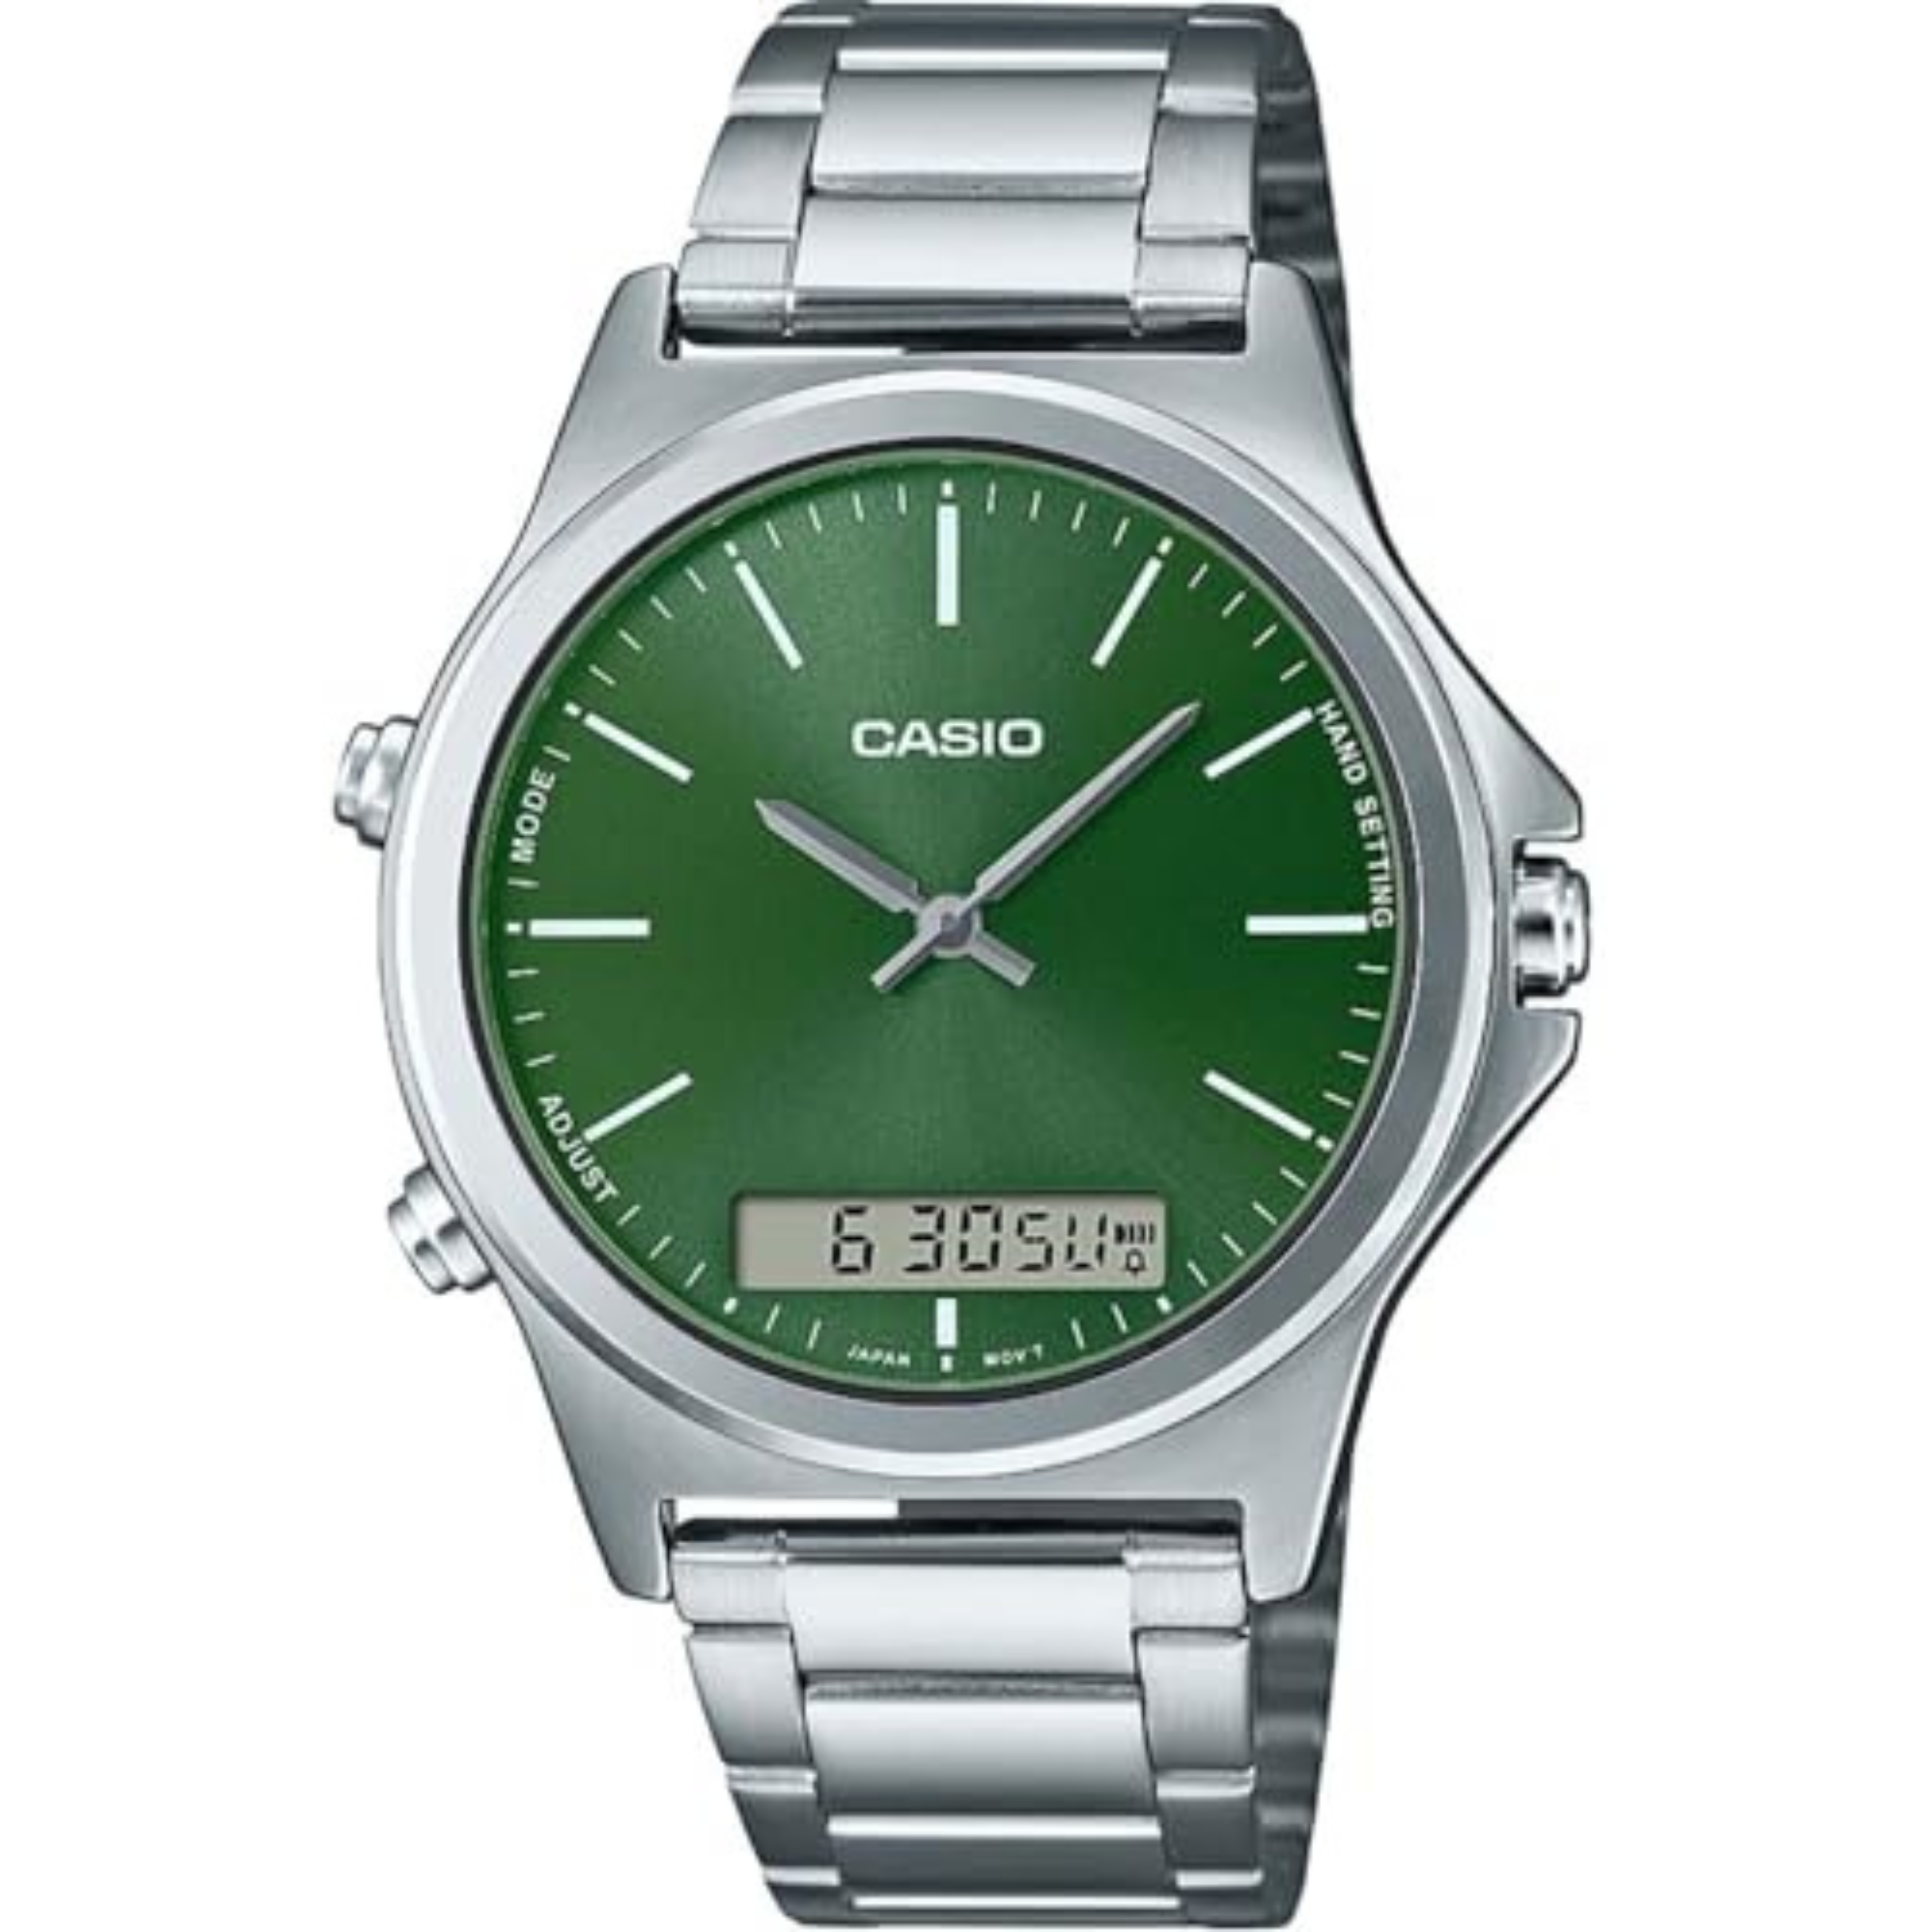 Casio analog black dial men's watch